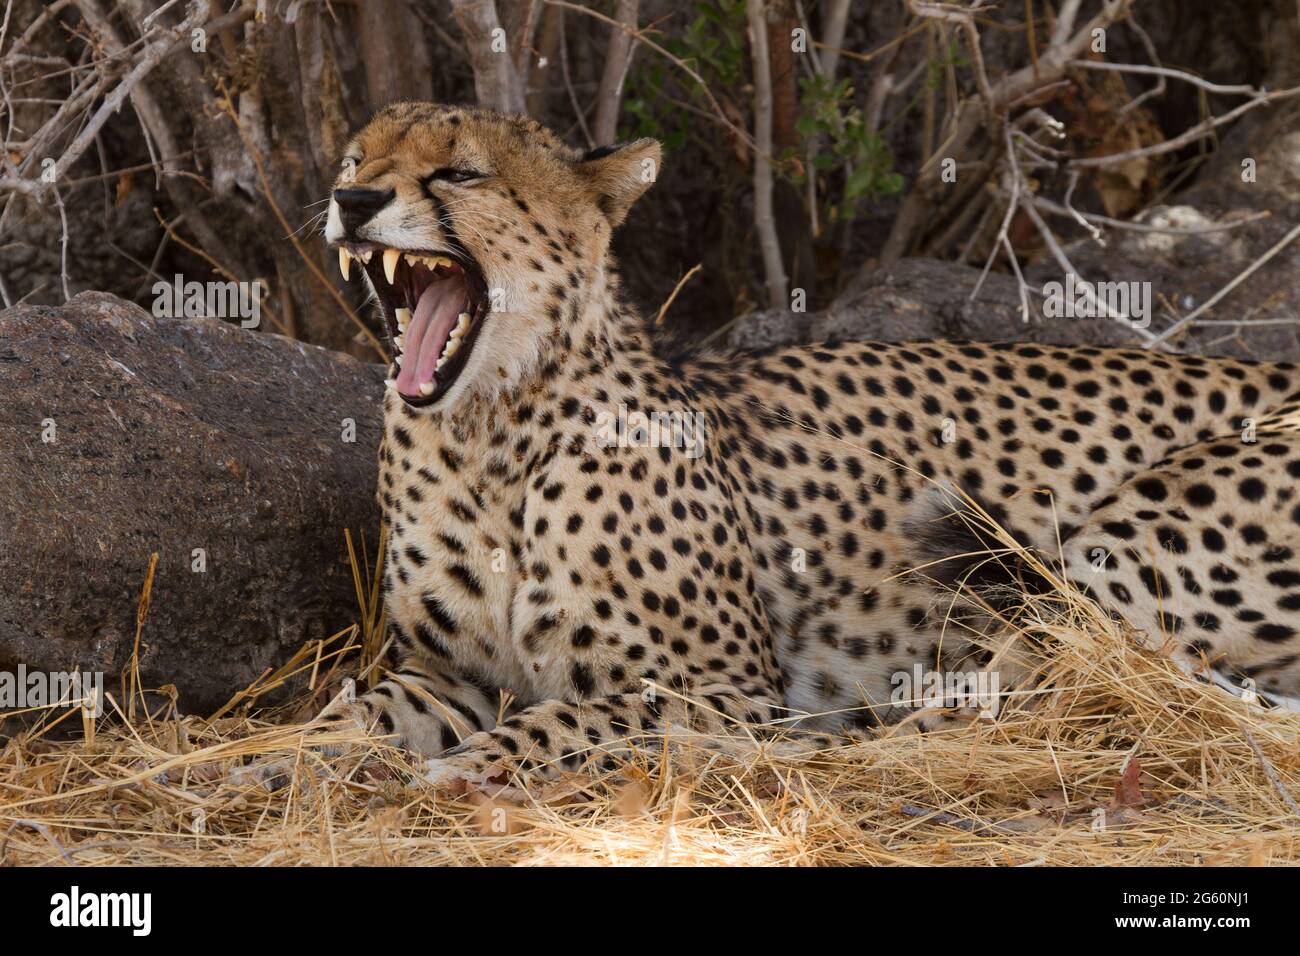 A cheetah, Acinonyx jubatus, yawns. Stock Photo